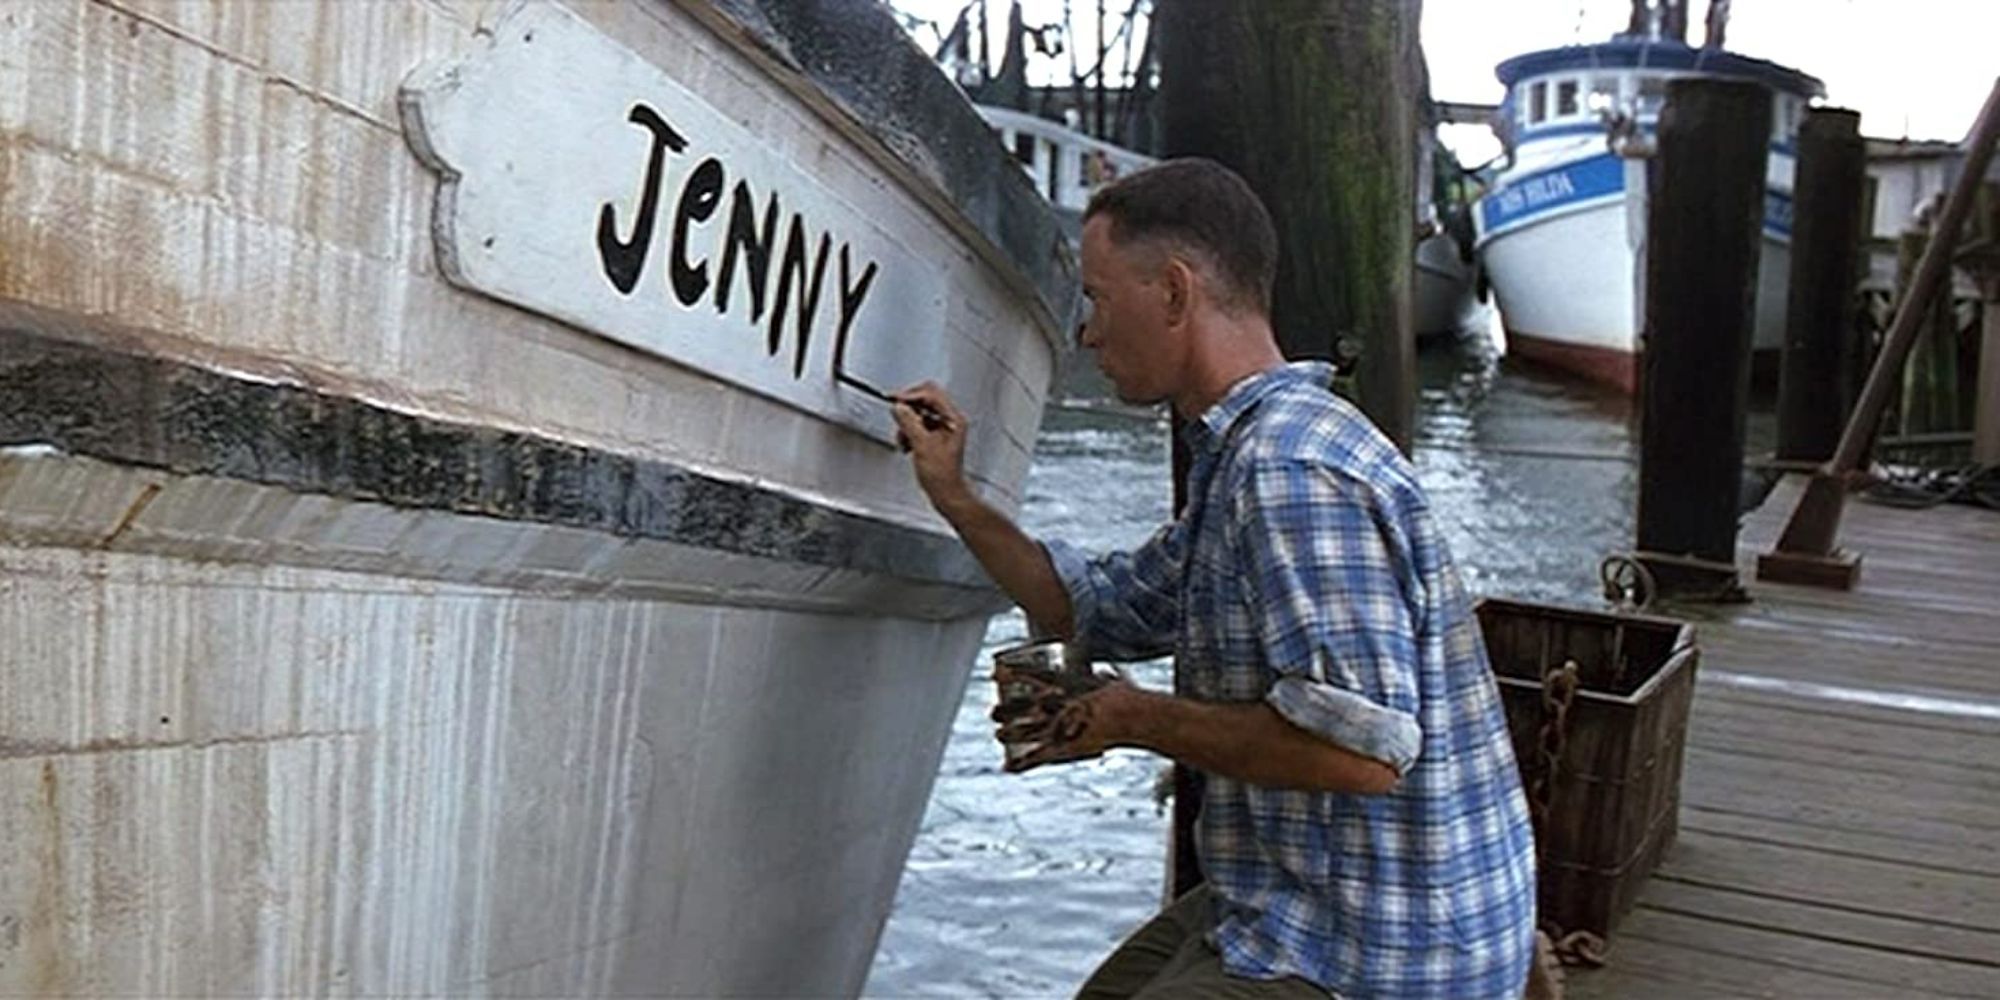 Forrest (Tom Hanks) paints "Jenny" on the side of his shrimping ship in Forrest Gump